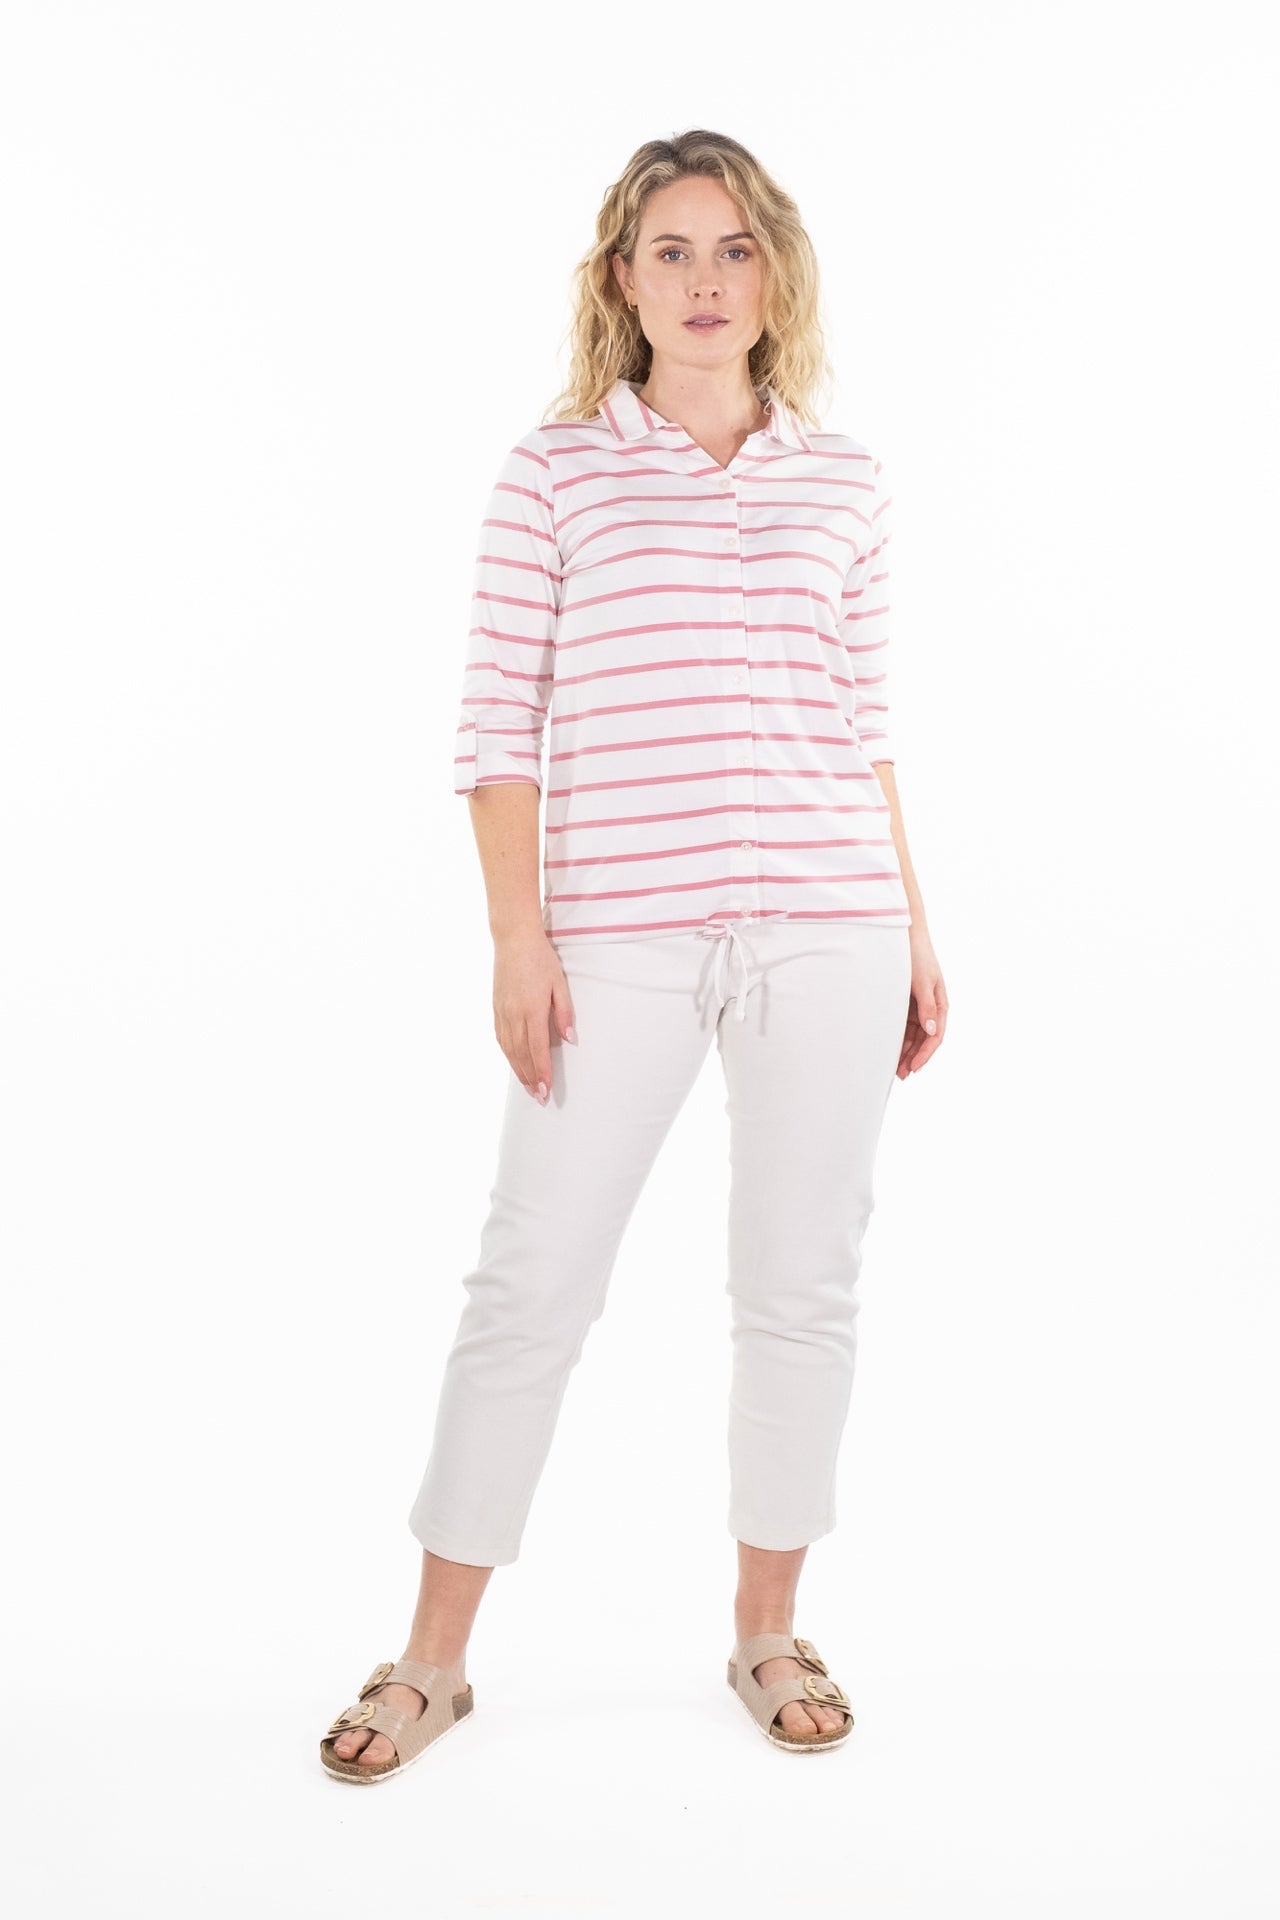 Joni Pink Stripe Jersey Shirt - Rupert and Buckley - Shirts & Tops